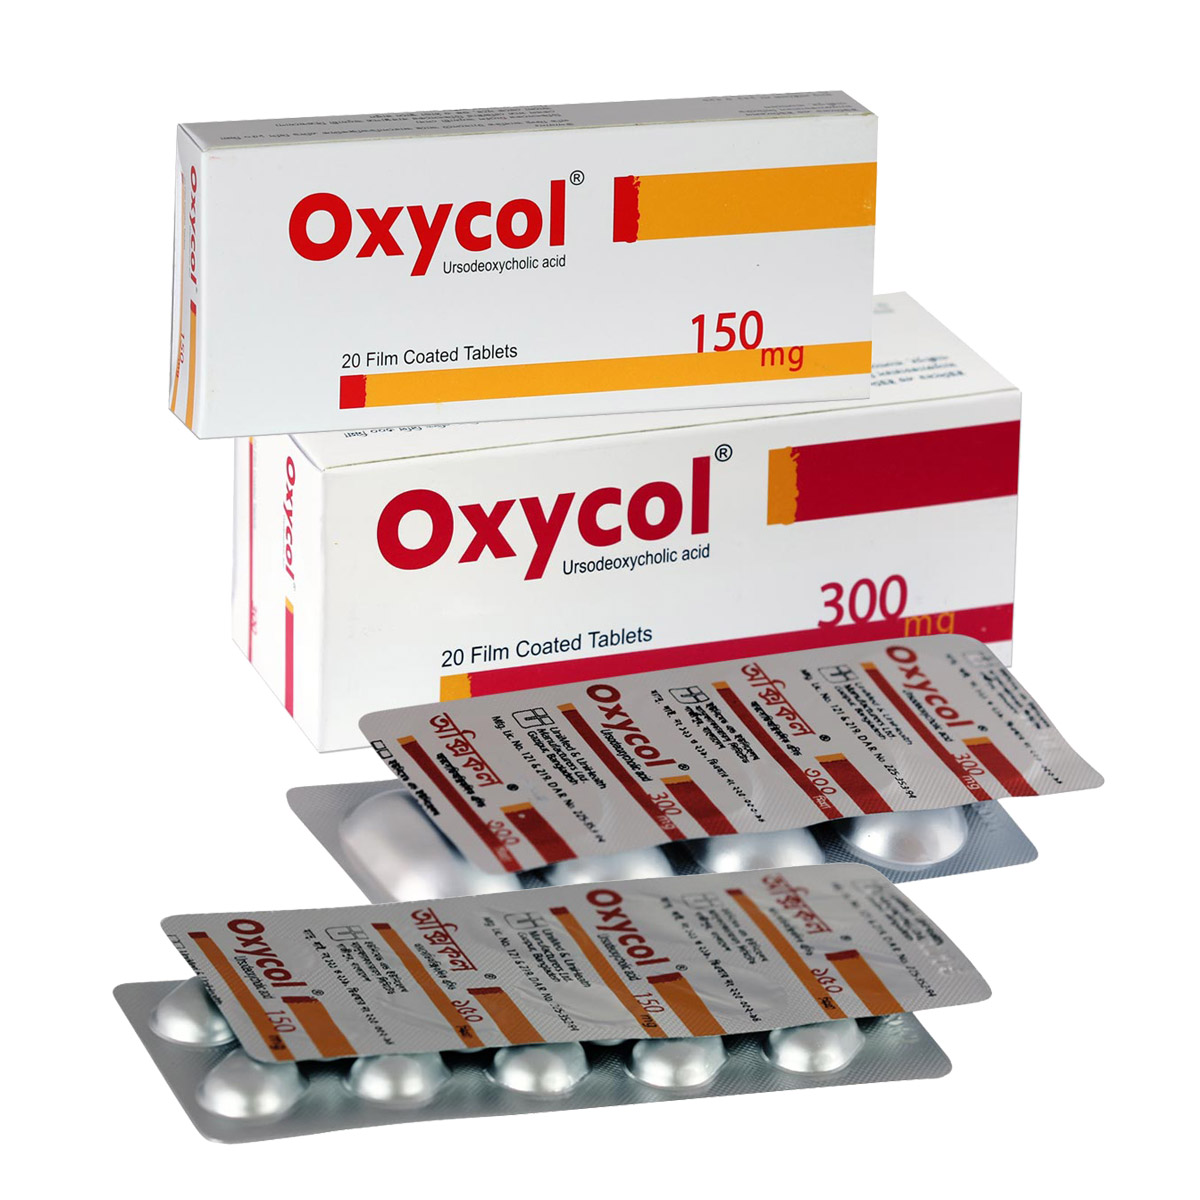 OXYCOL